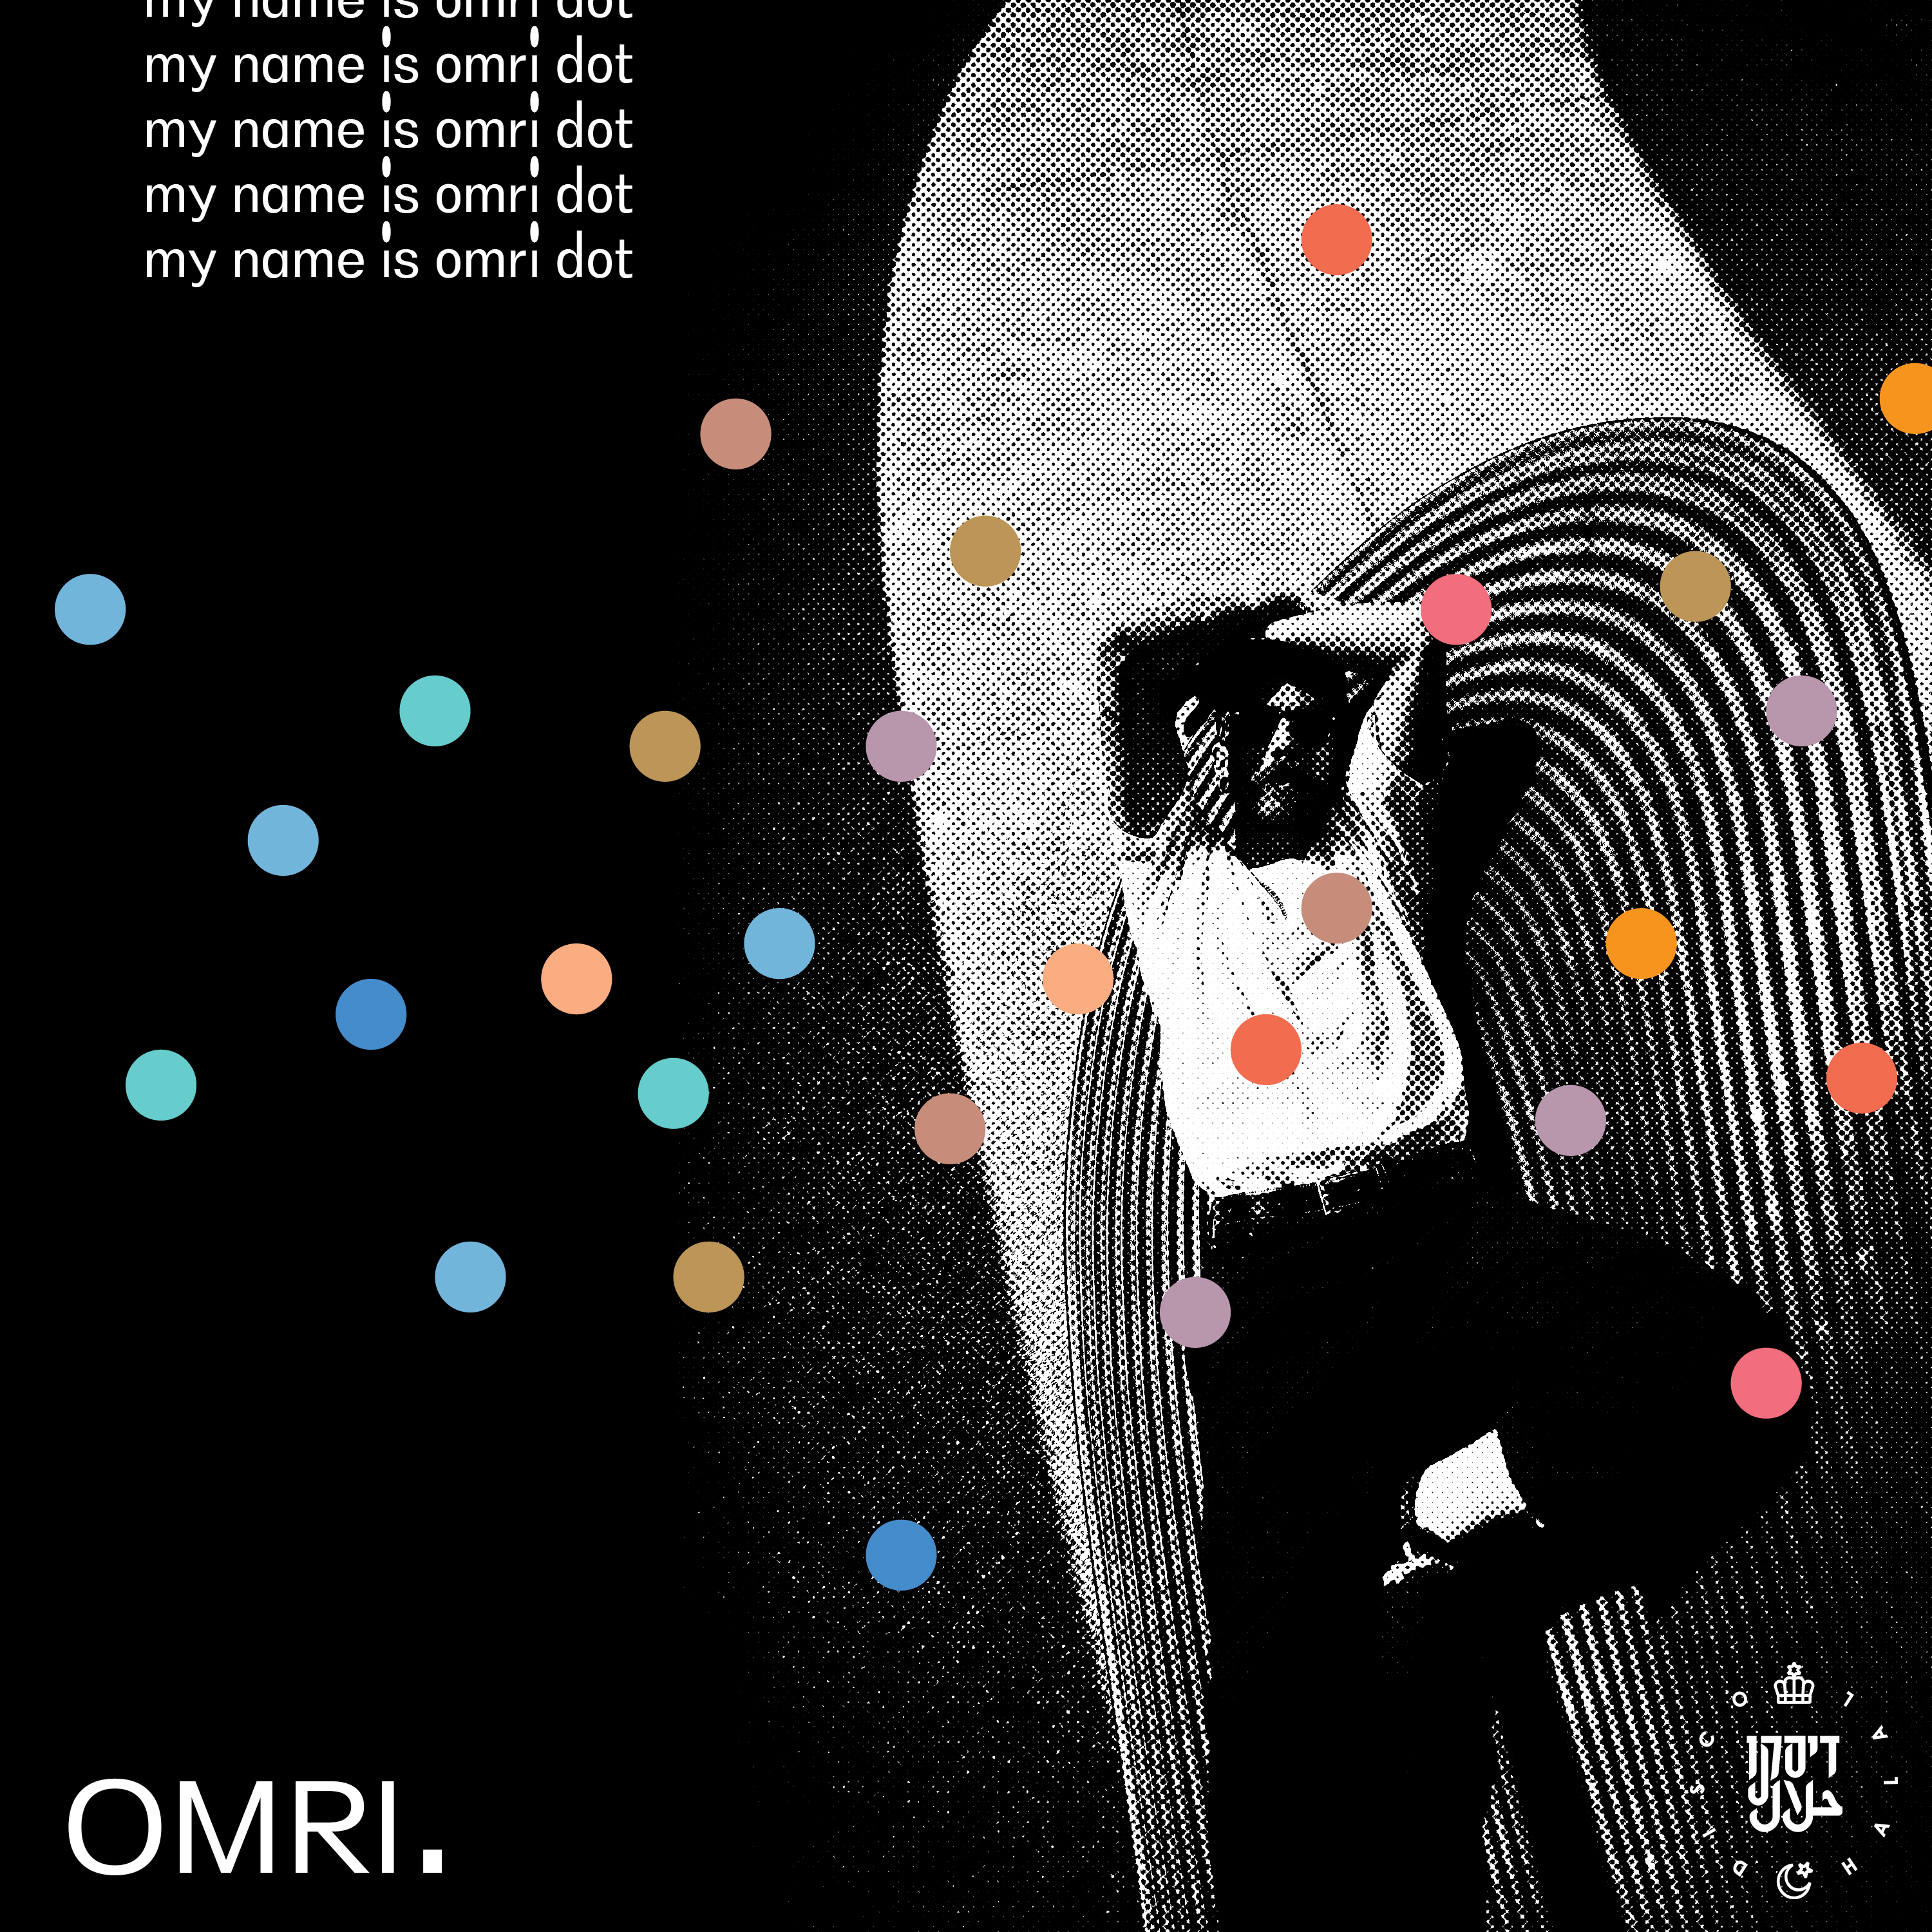 Emerging Israeli producer OMRI. releases debut EP